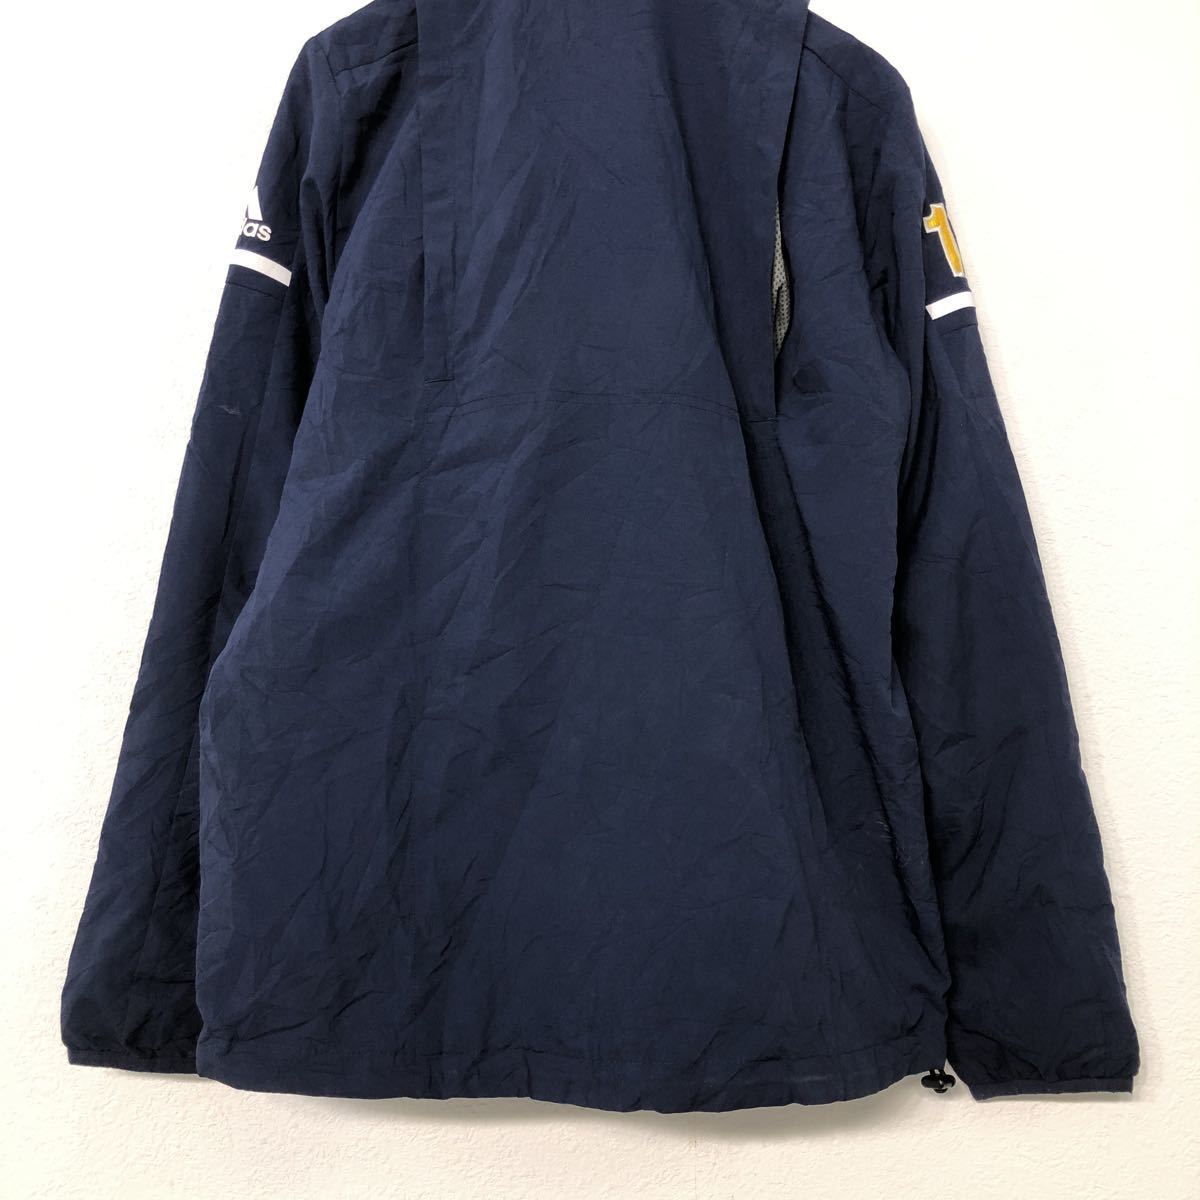 adidas nylon jacket L navy white yellow Adidas Zip up pocket Logo old clothes . America buying up a507-6171